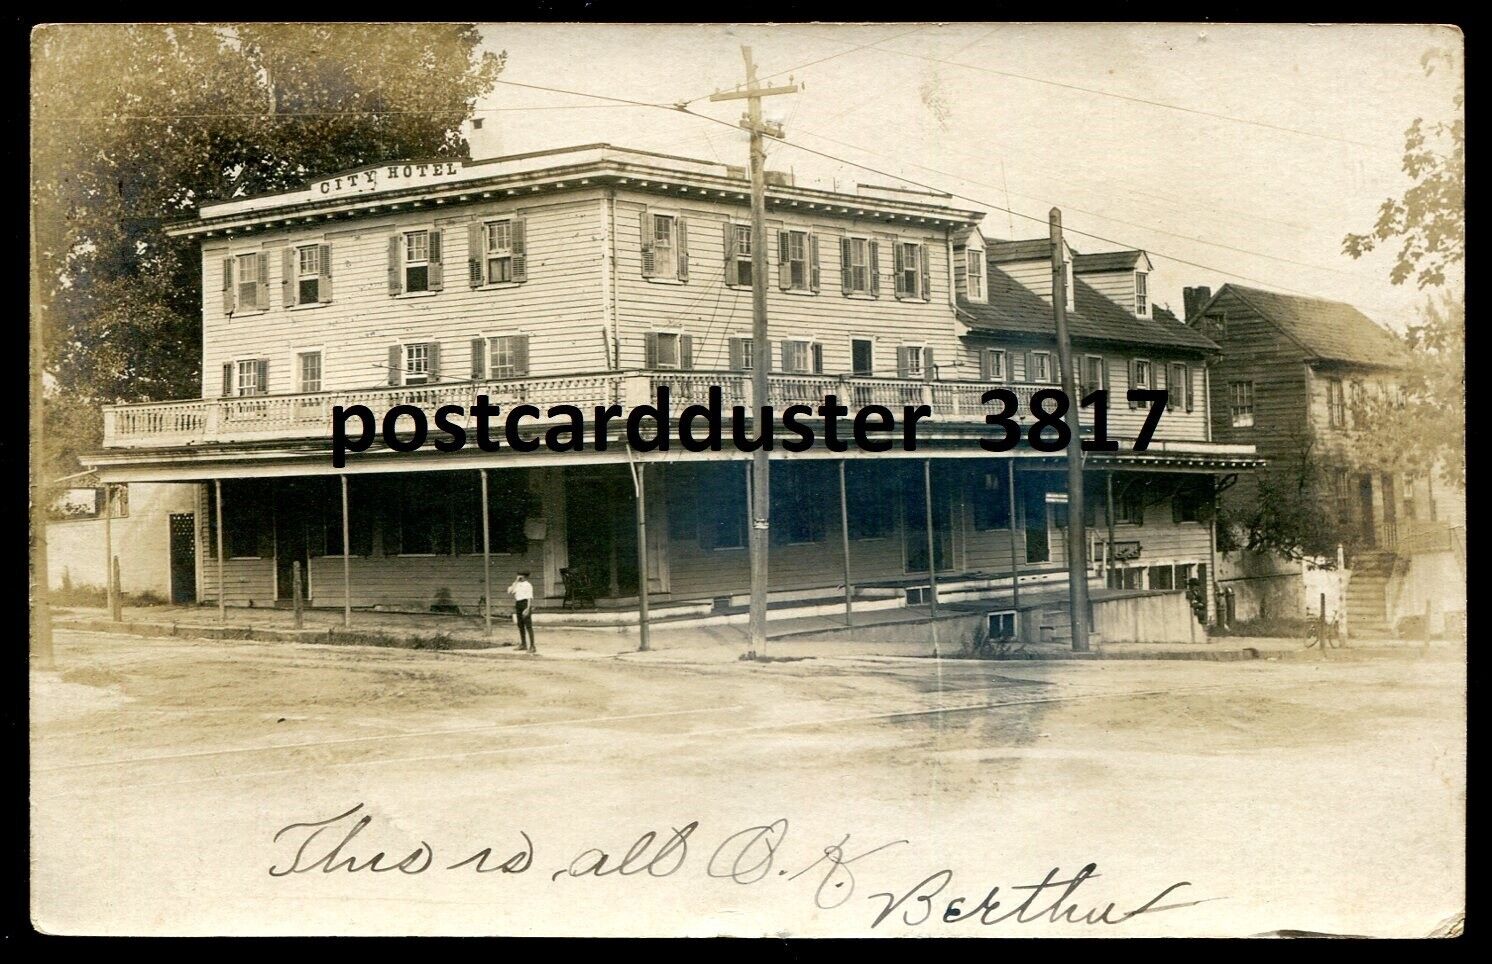 BRIDGETON New Jersey 1905 Broad Street City Hotel. Real Photo Postcard